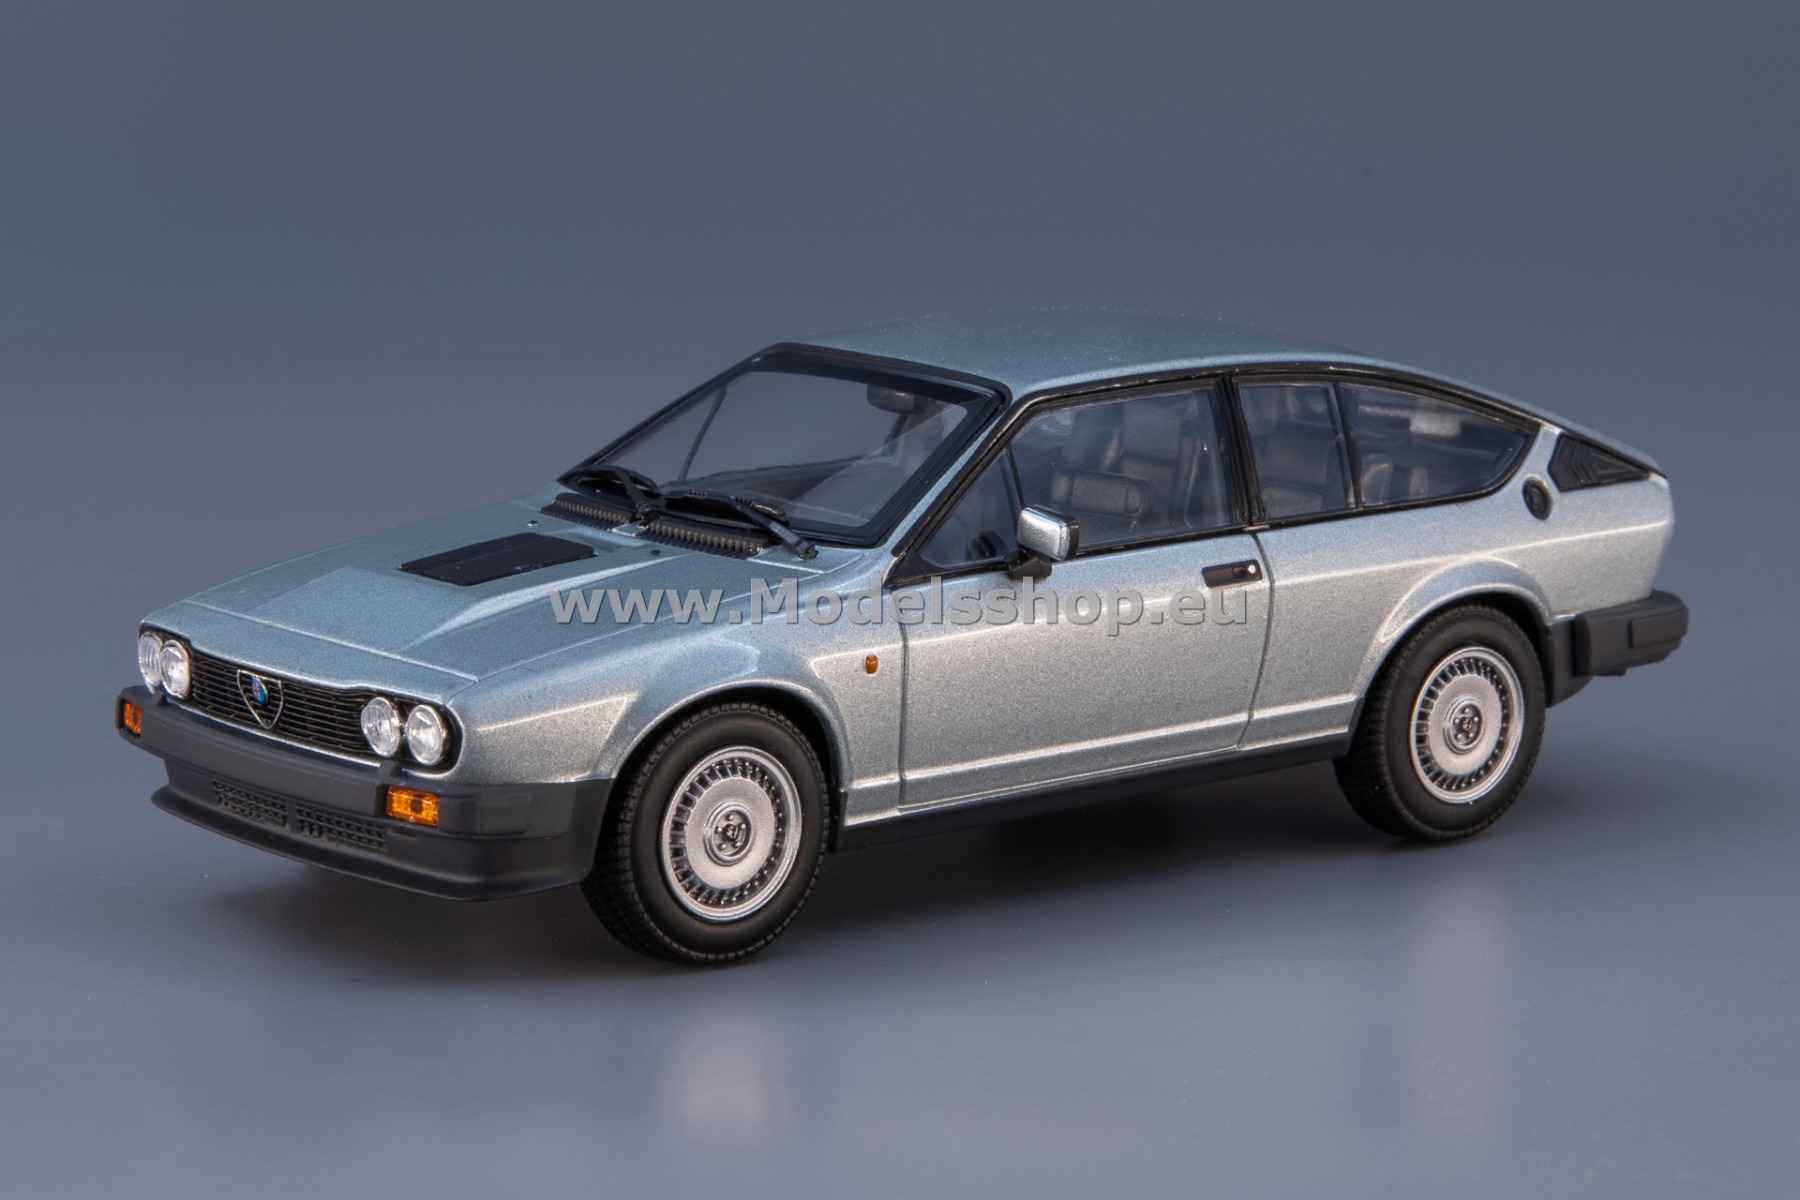 Maxichamps 940120141 Alfa Romeo GTV, 1983 /silver metallic/